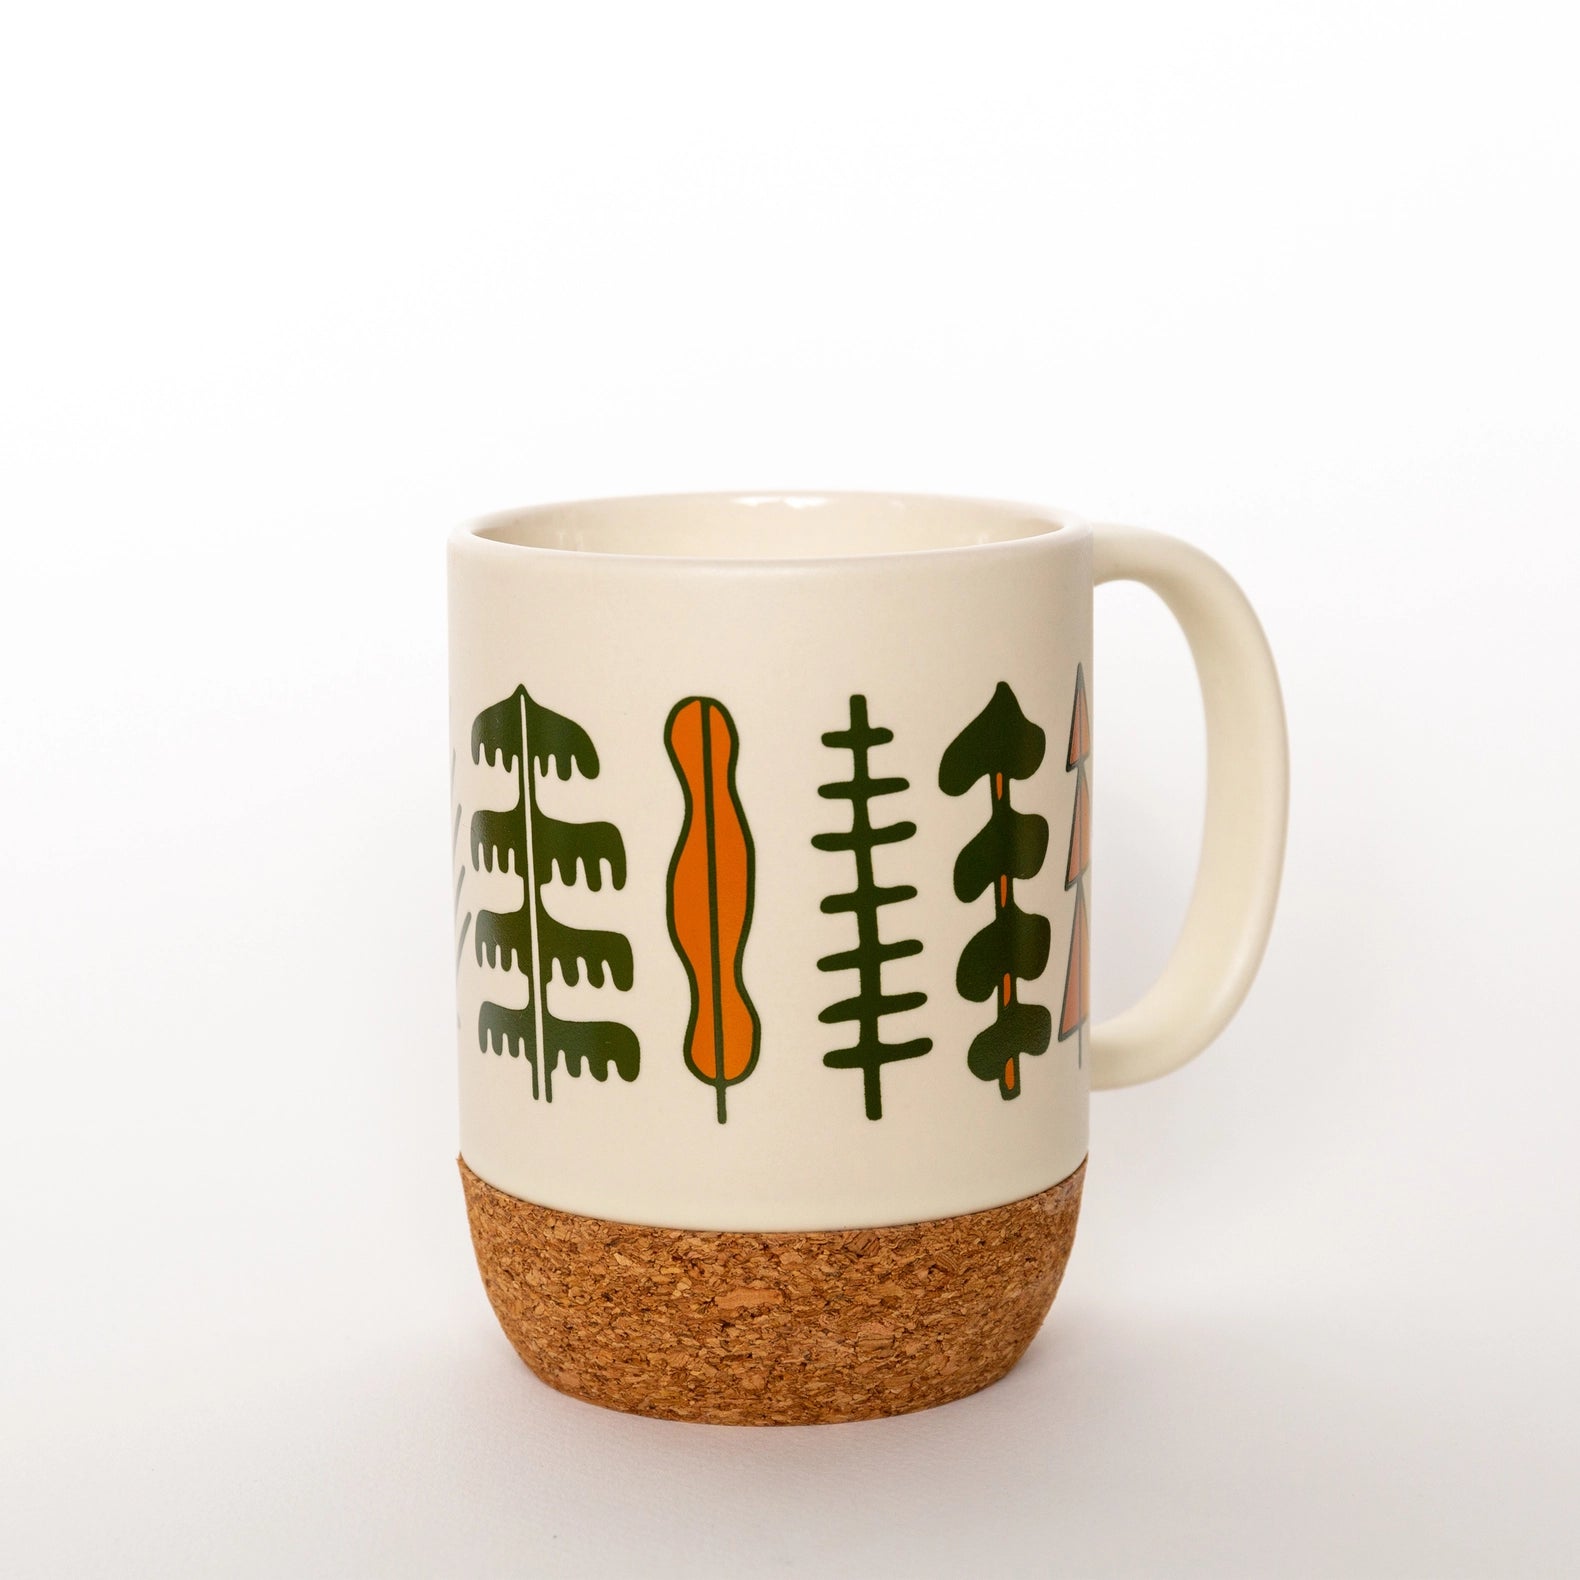 Tree Cork Base Mug